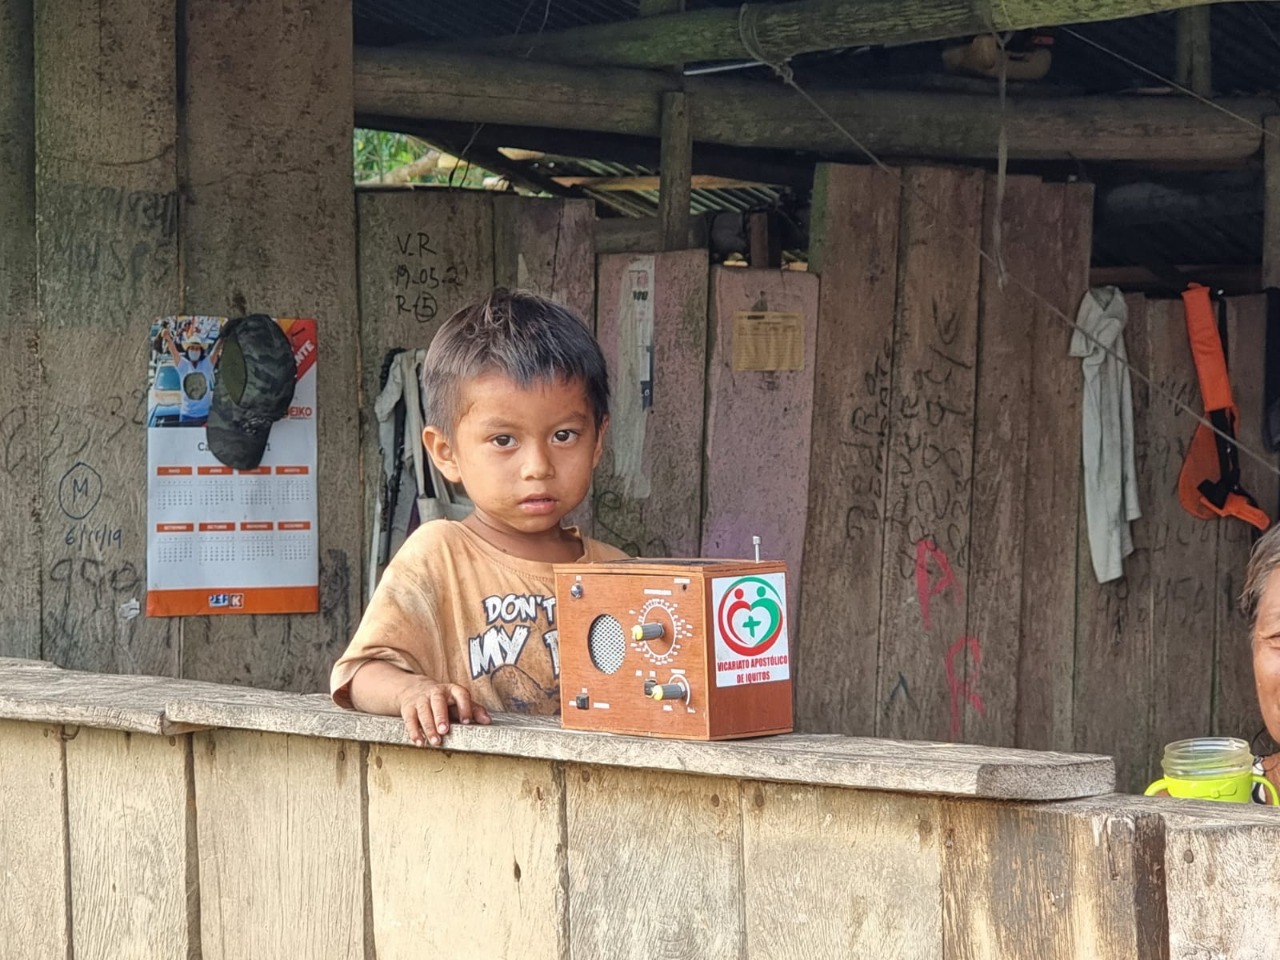 Child with solar powered radio in Peru